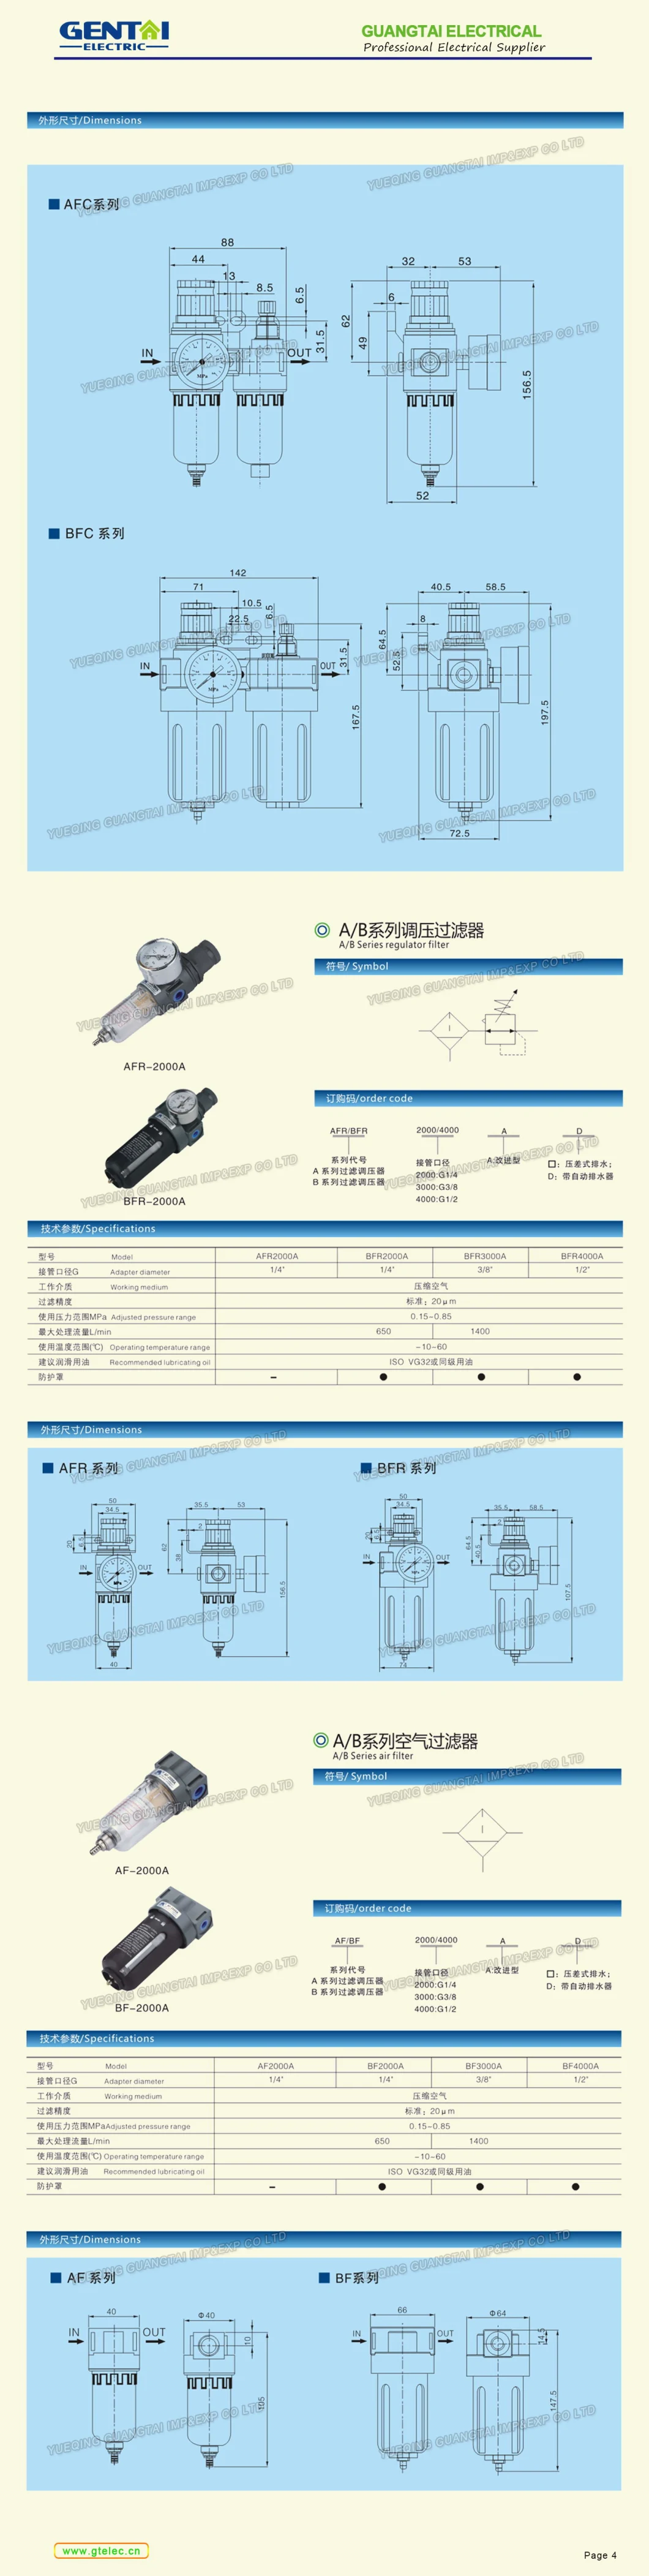 AC4010-04pnecumatic Two Units Frl Combination Air Filter Regulator & Lubricator